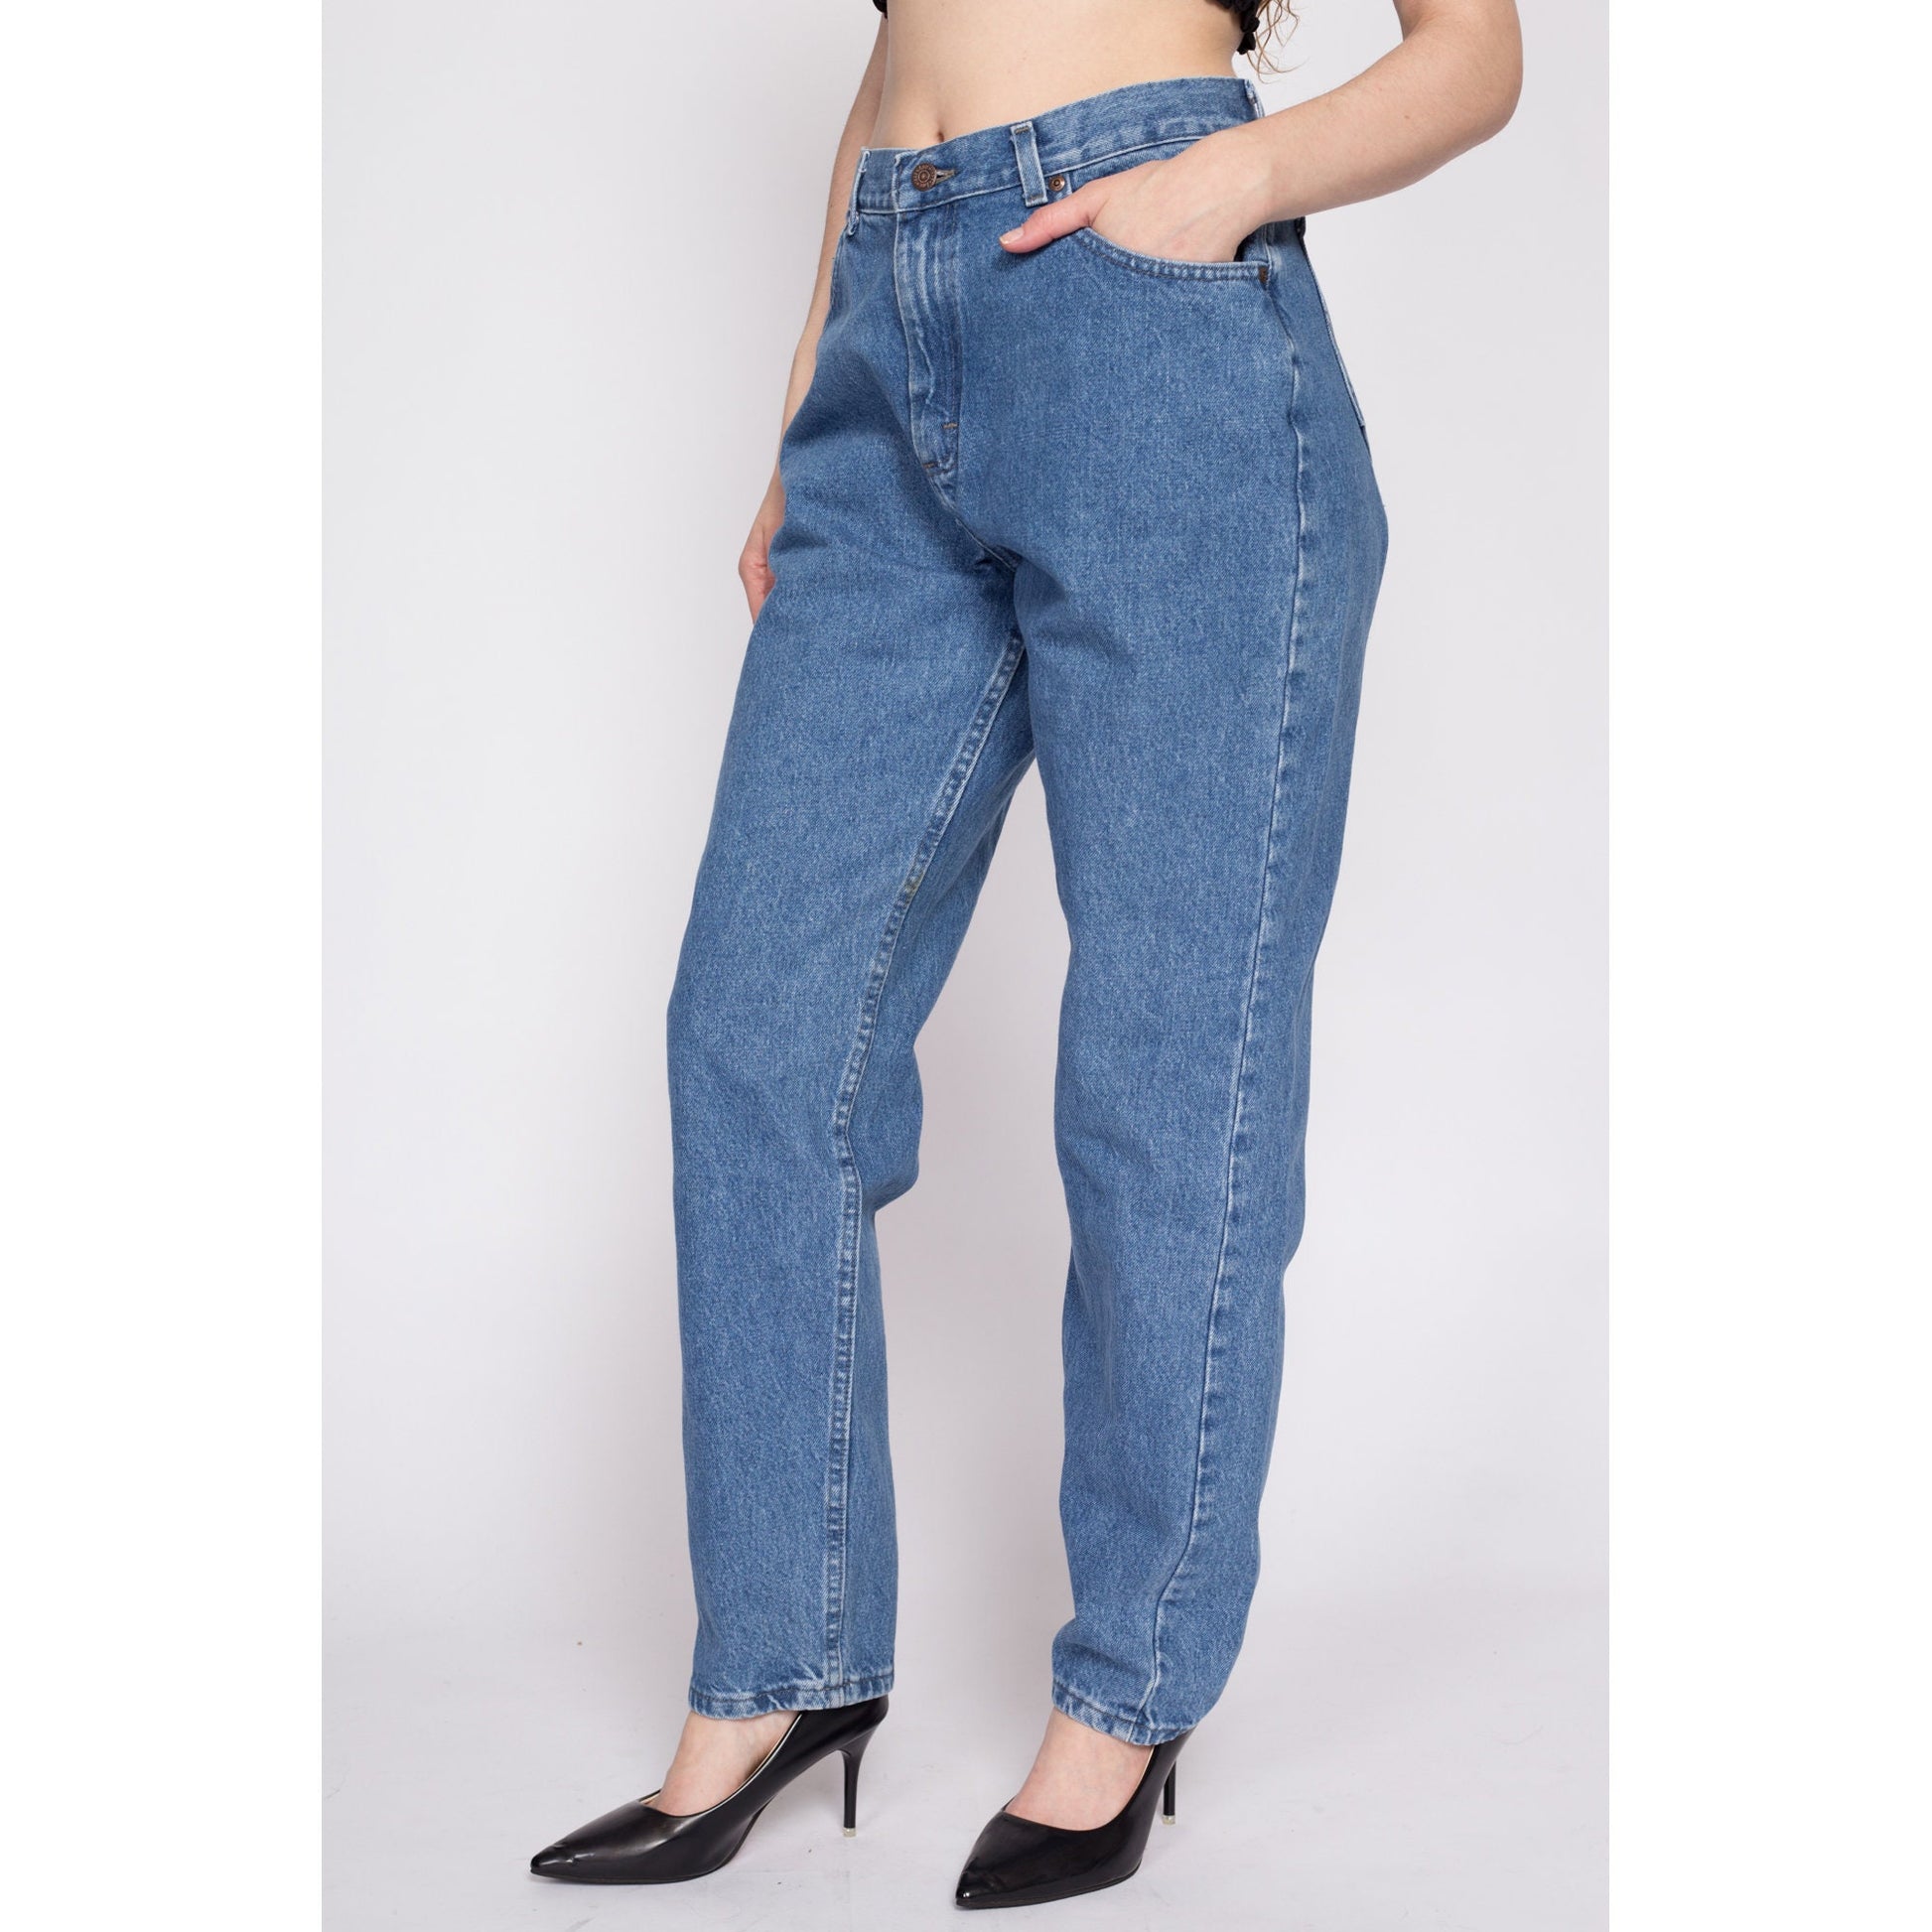 90s Lee High Waisted Mom Jeans - Medium to Large, 30.5" | Vintage Denim Tapered Leg Jeans